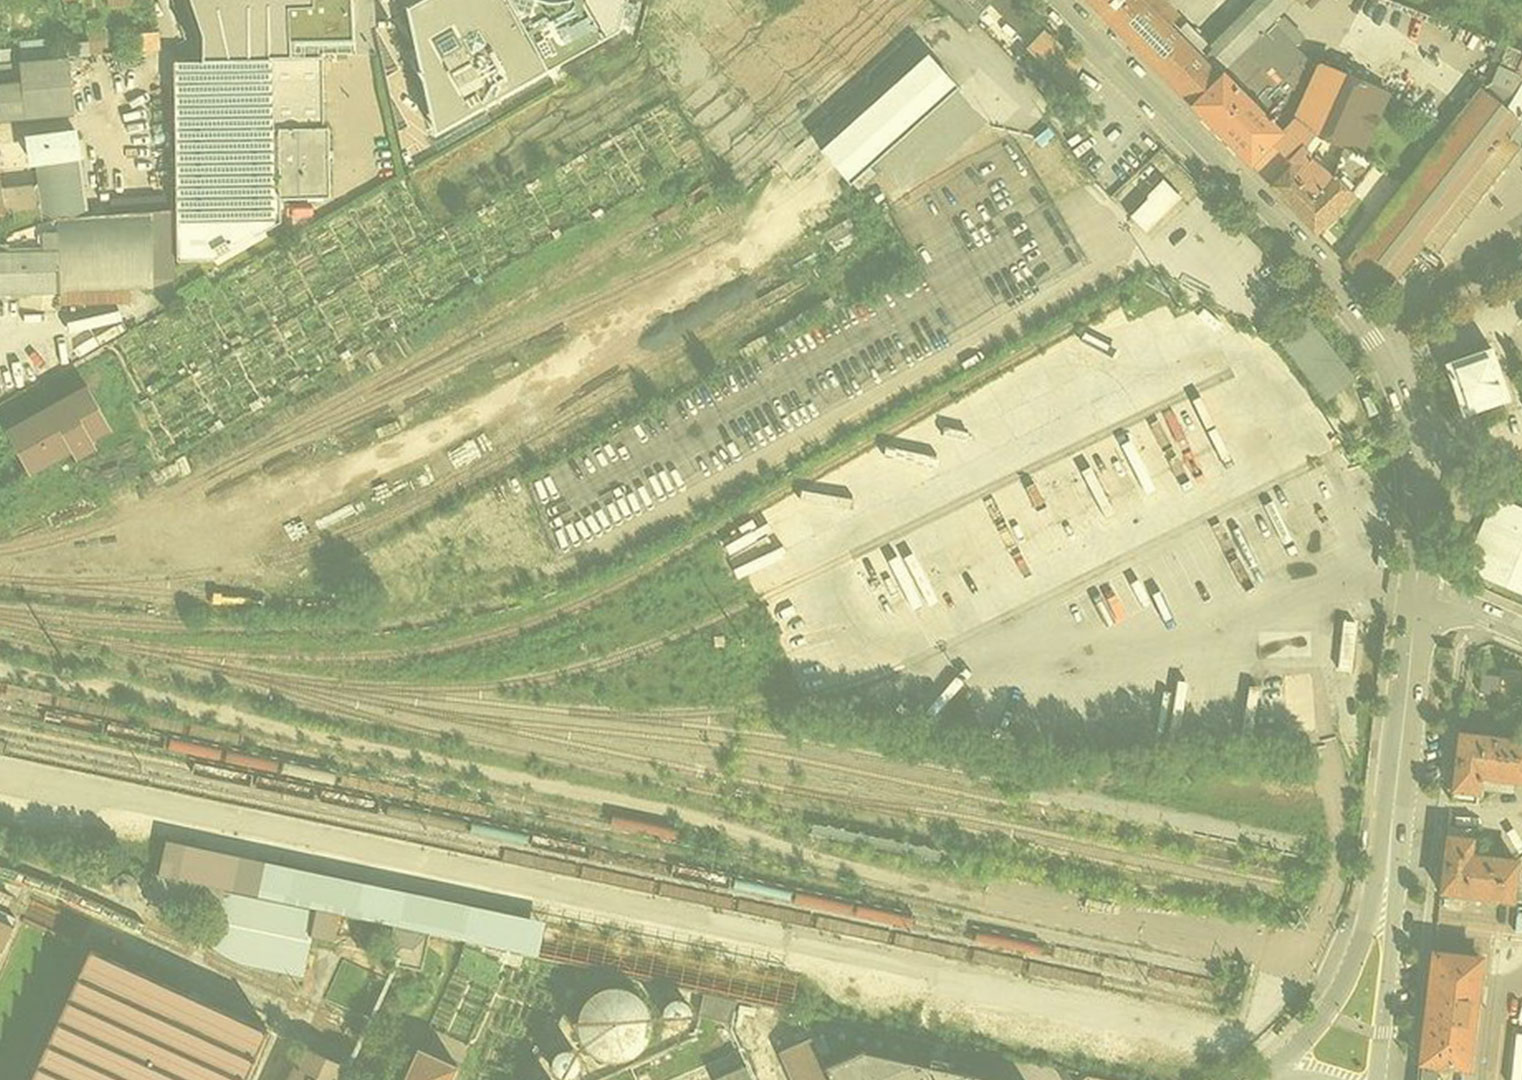 satelite image of the area 2014 http://geokatalog.buergernetz.bz.it/geokatalog/